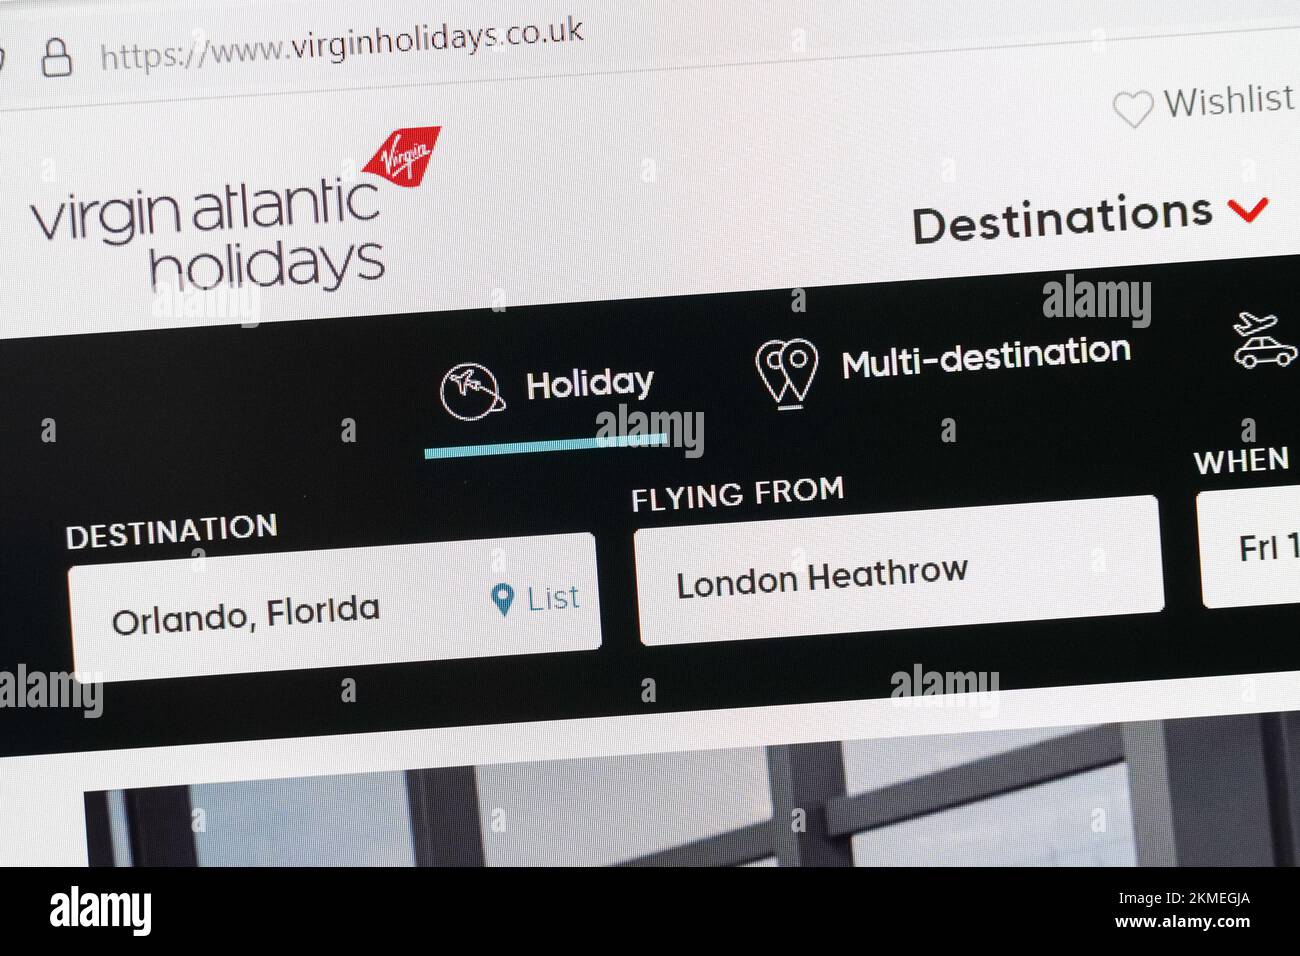 Webseite von Virgin Atlantic Holidays Stockfoto